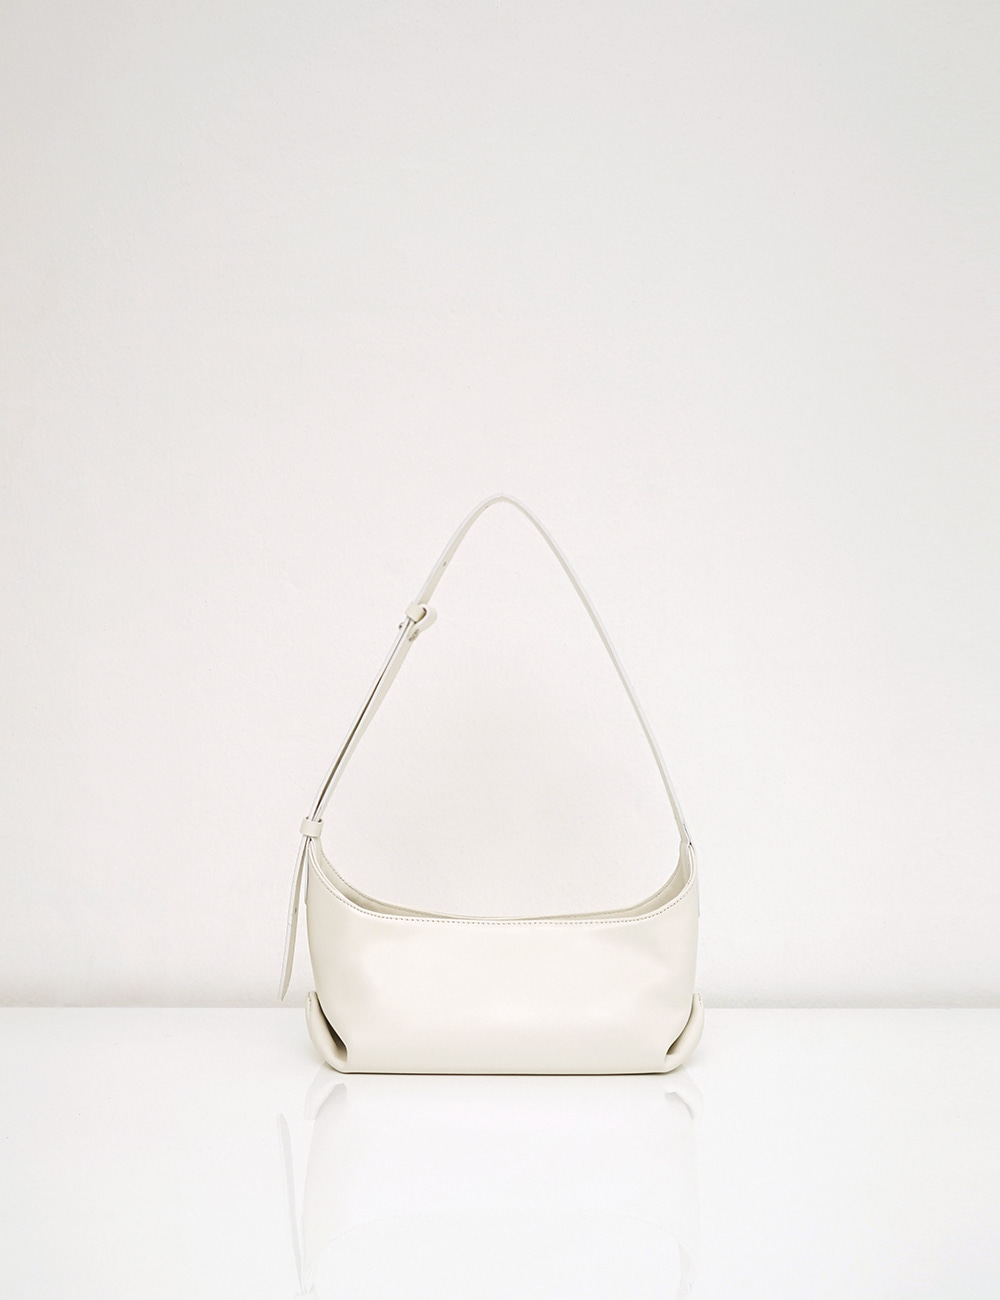 Bote bag / white